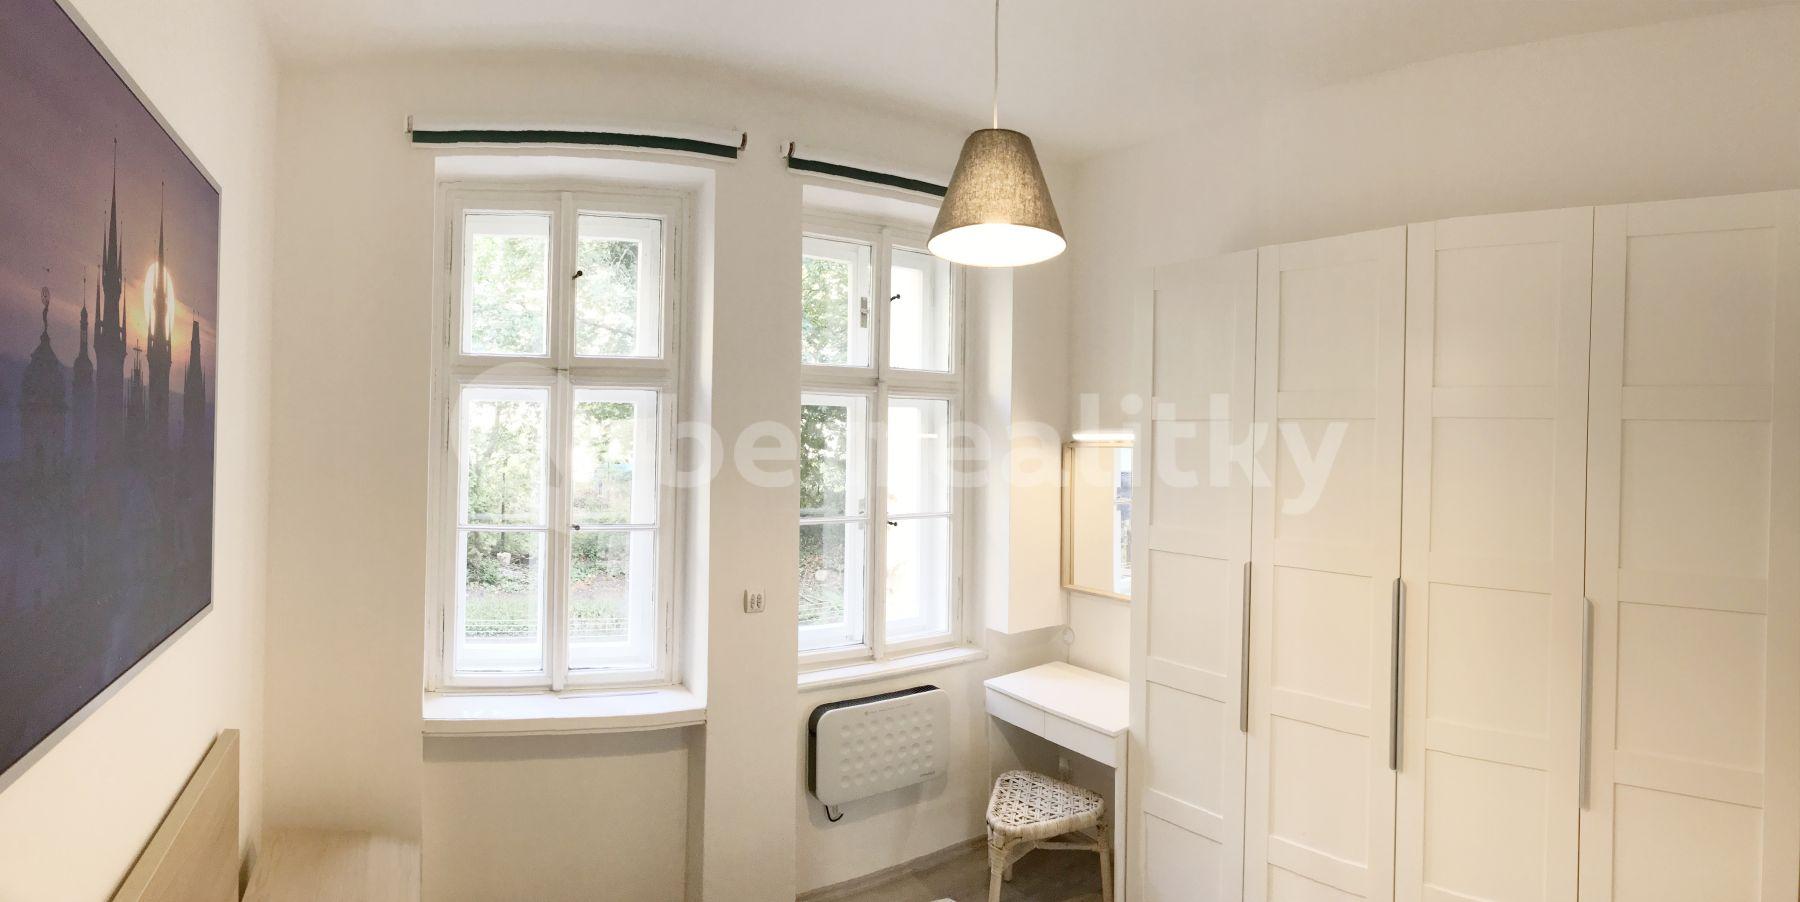 1 bedroom with open-plan kitchen flat to rent, 42 m², Černomořská, Prague, Prague